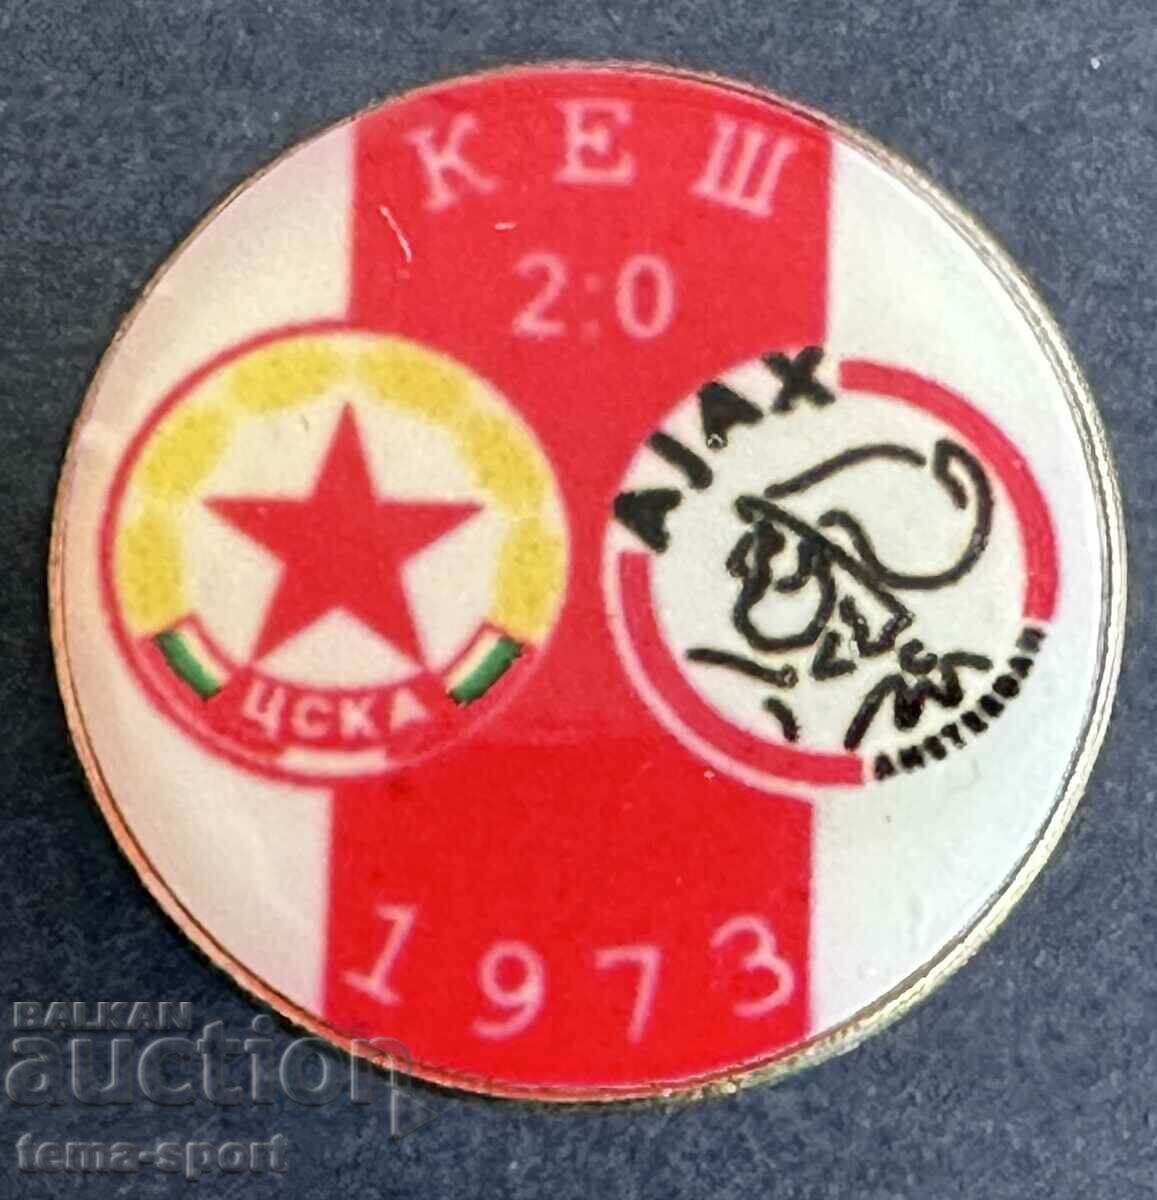 376 България знак футболен клуб ЦСКА Аякс 1973г.